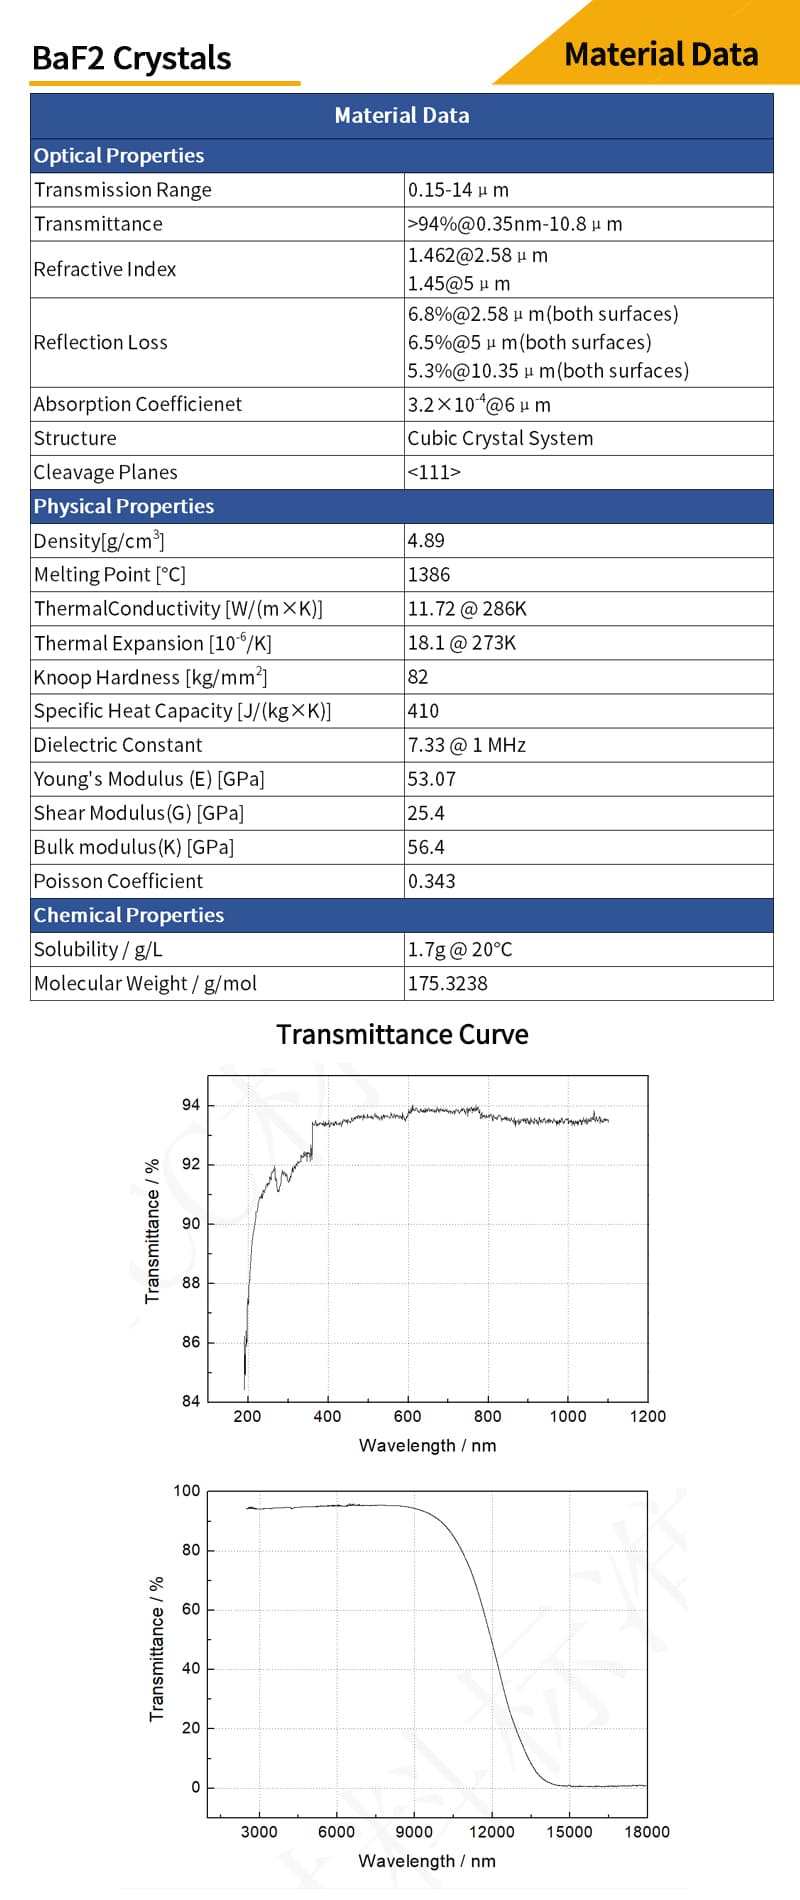 Barium Fluoride rectangular drilled  window material data and transmittance curves